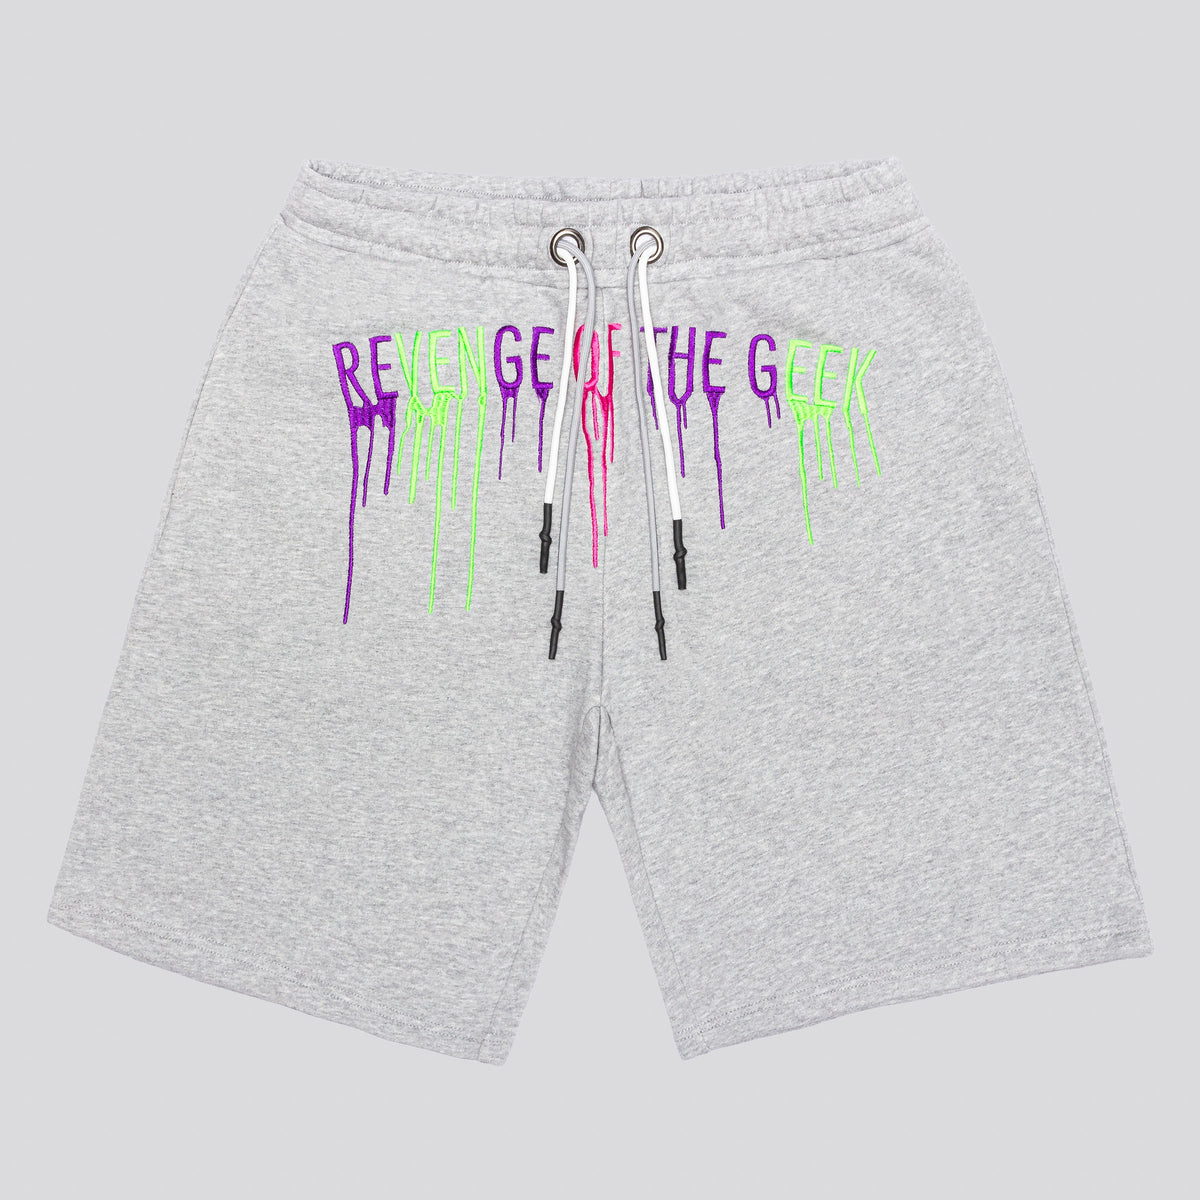 Revenge of the Geek | Drip Sweat Graffiti Grey Shorts